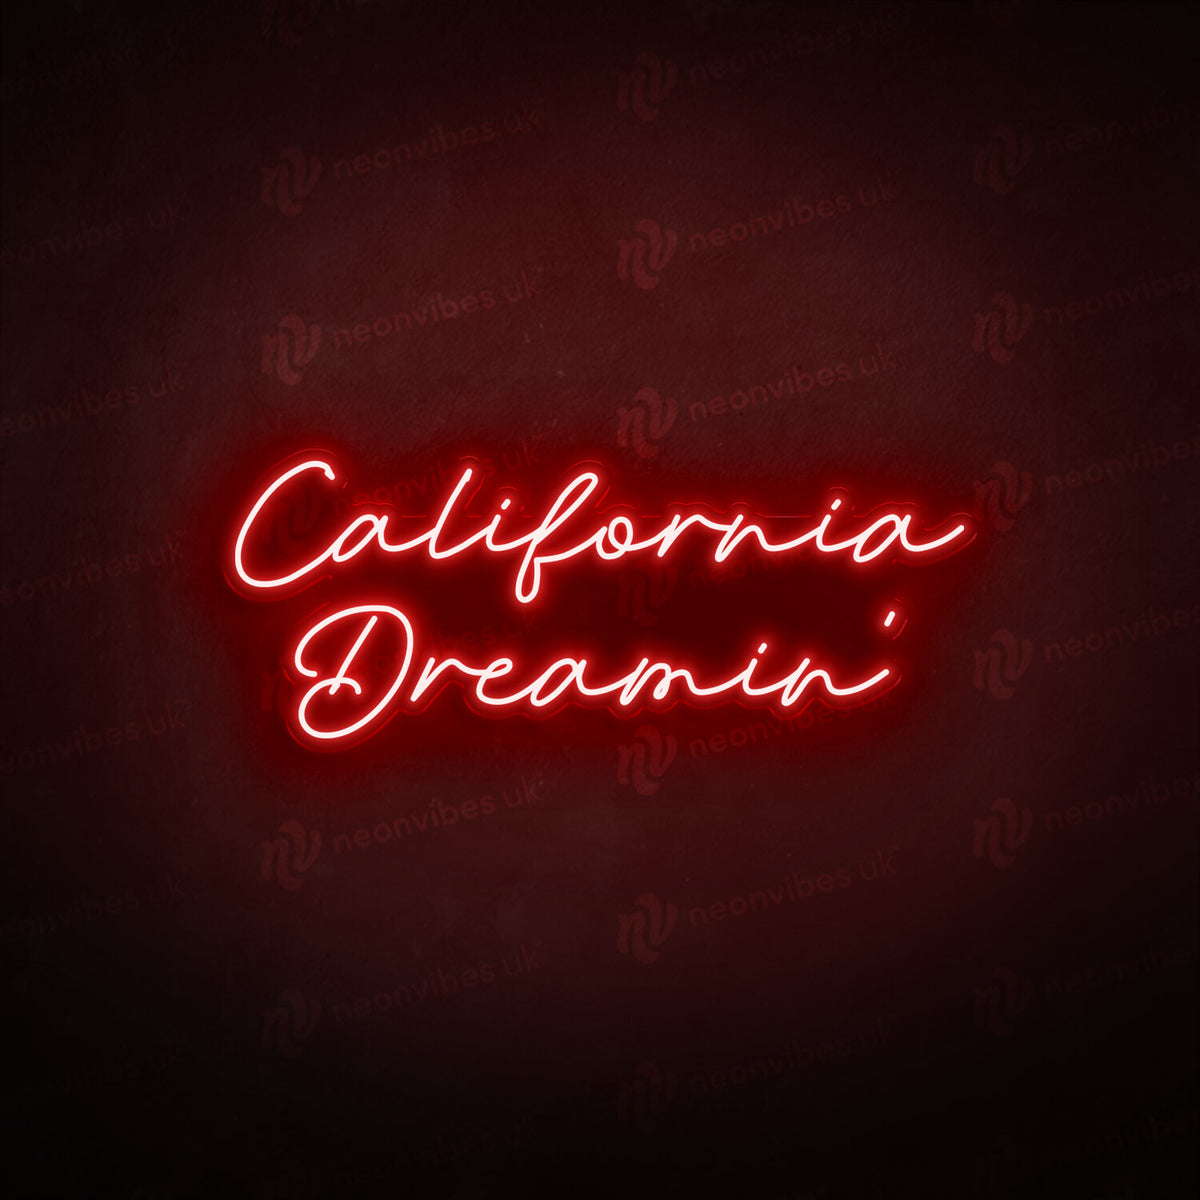 California dreaming neon sign